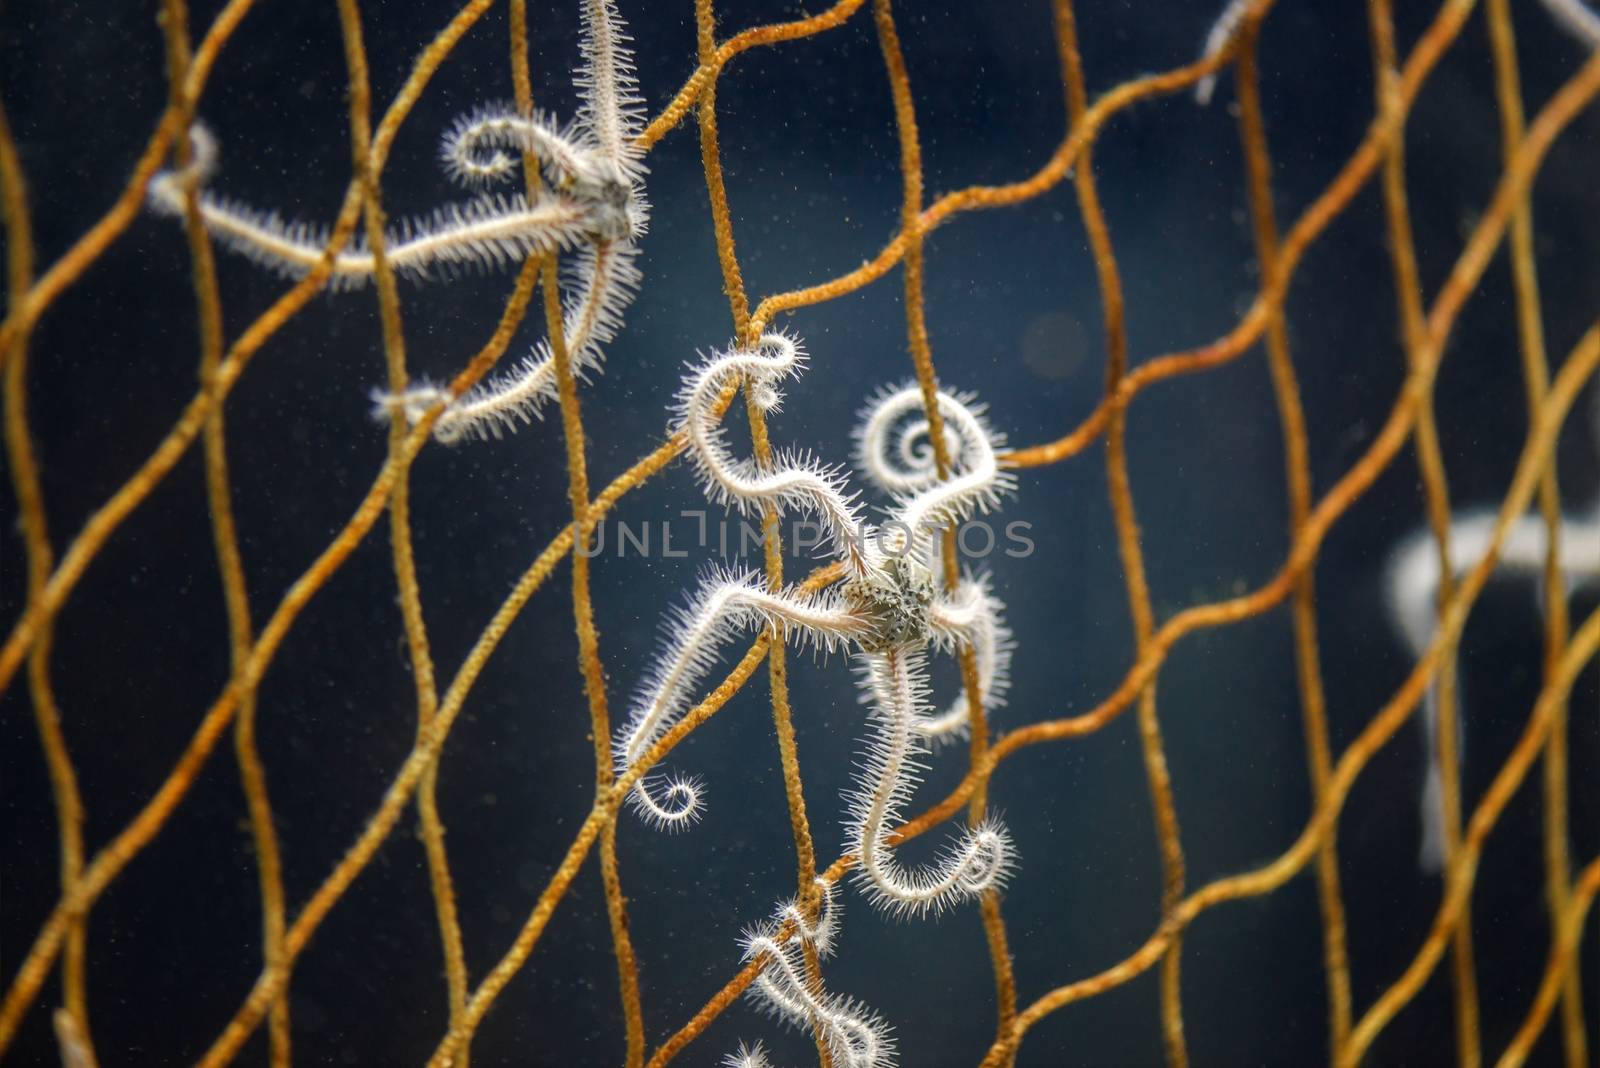 Starfish in net by svedoliver